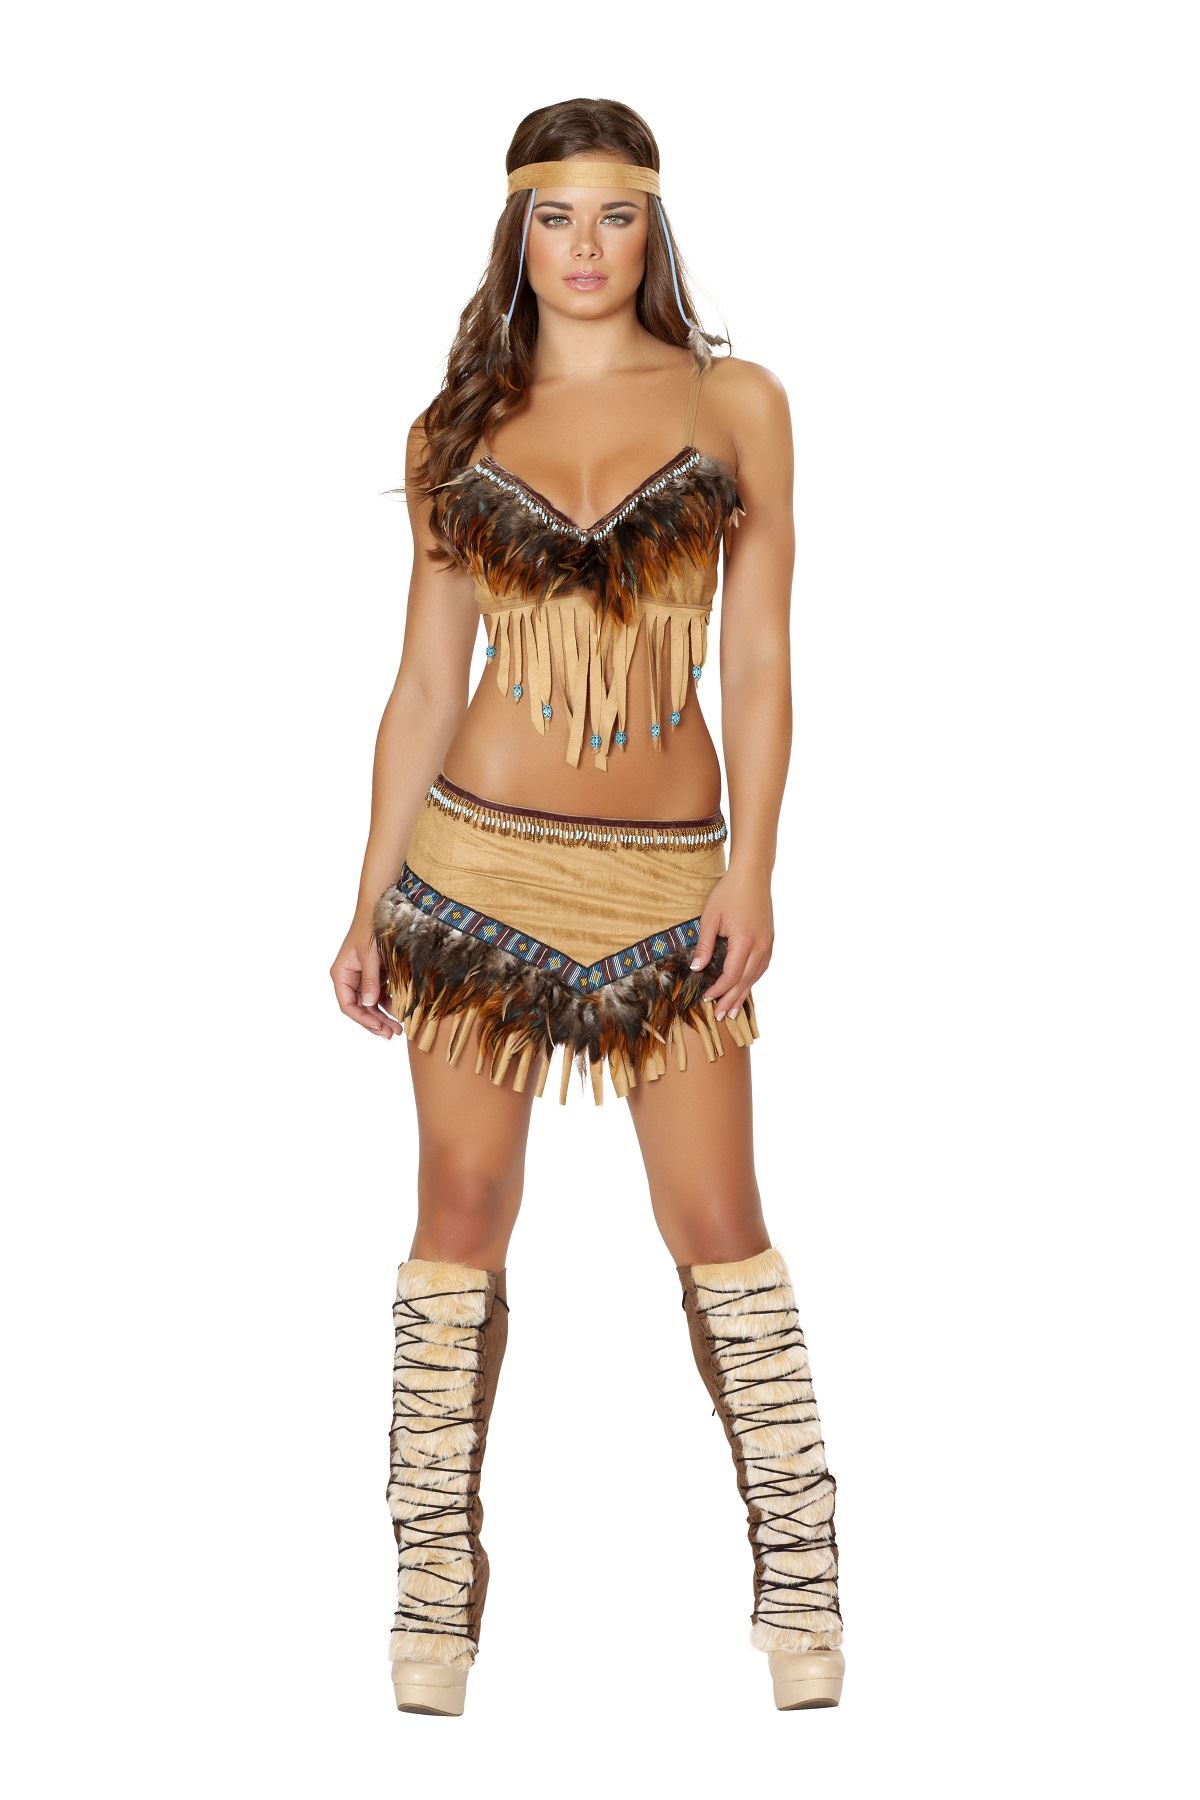 Adult Native American Noble Indian Sweatheart Women Costume, $68.99